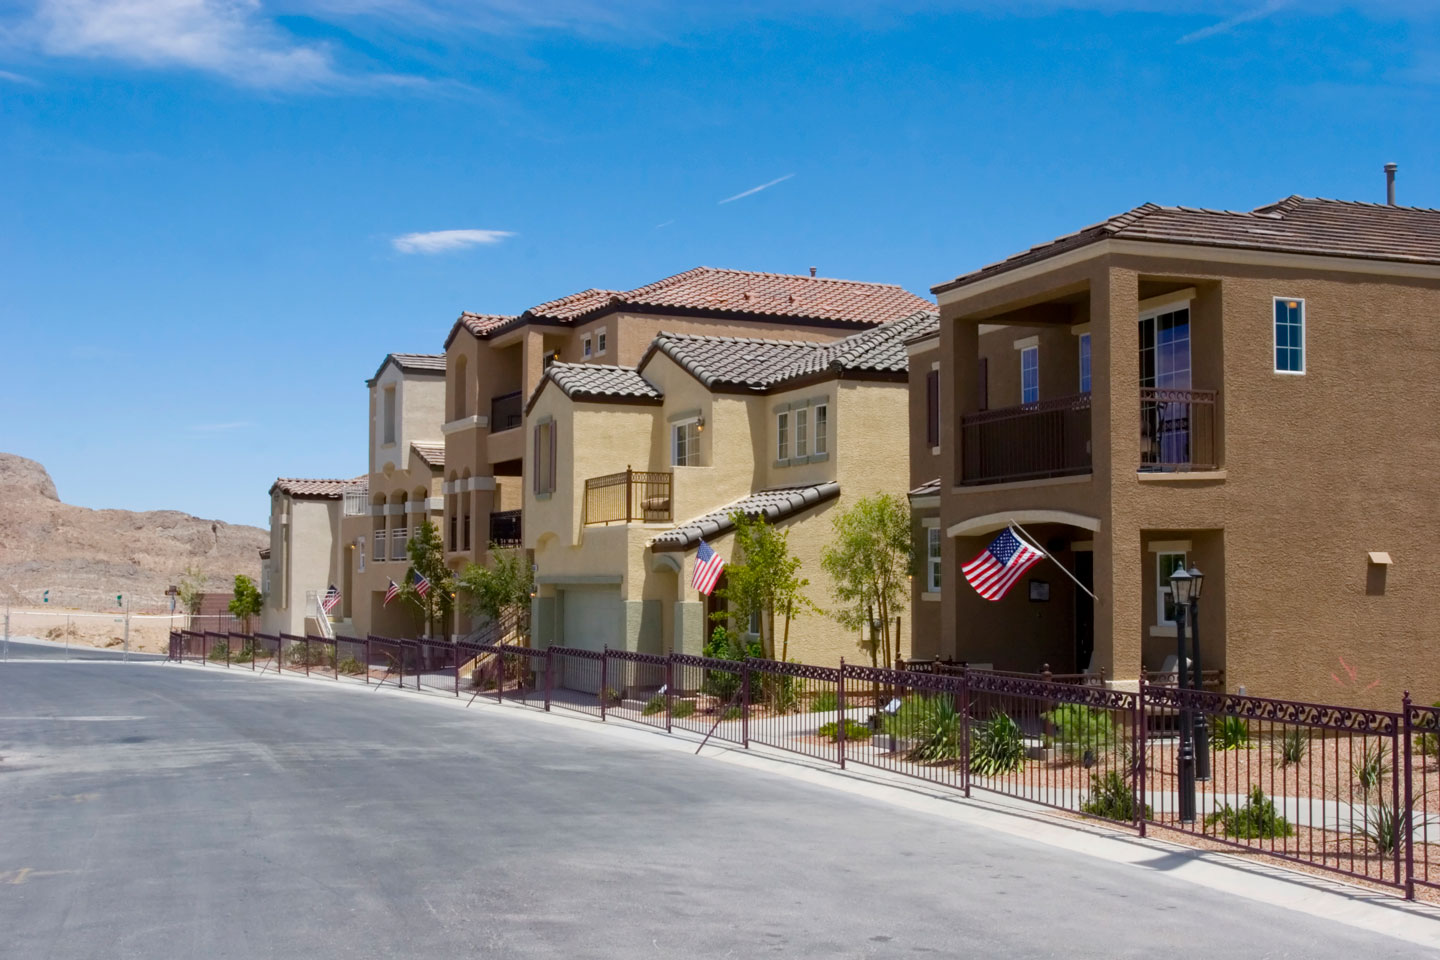 The Las Vegas Annual Housing Report – 2023